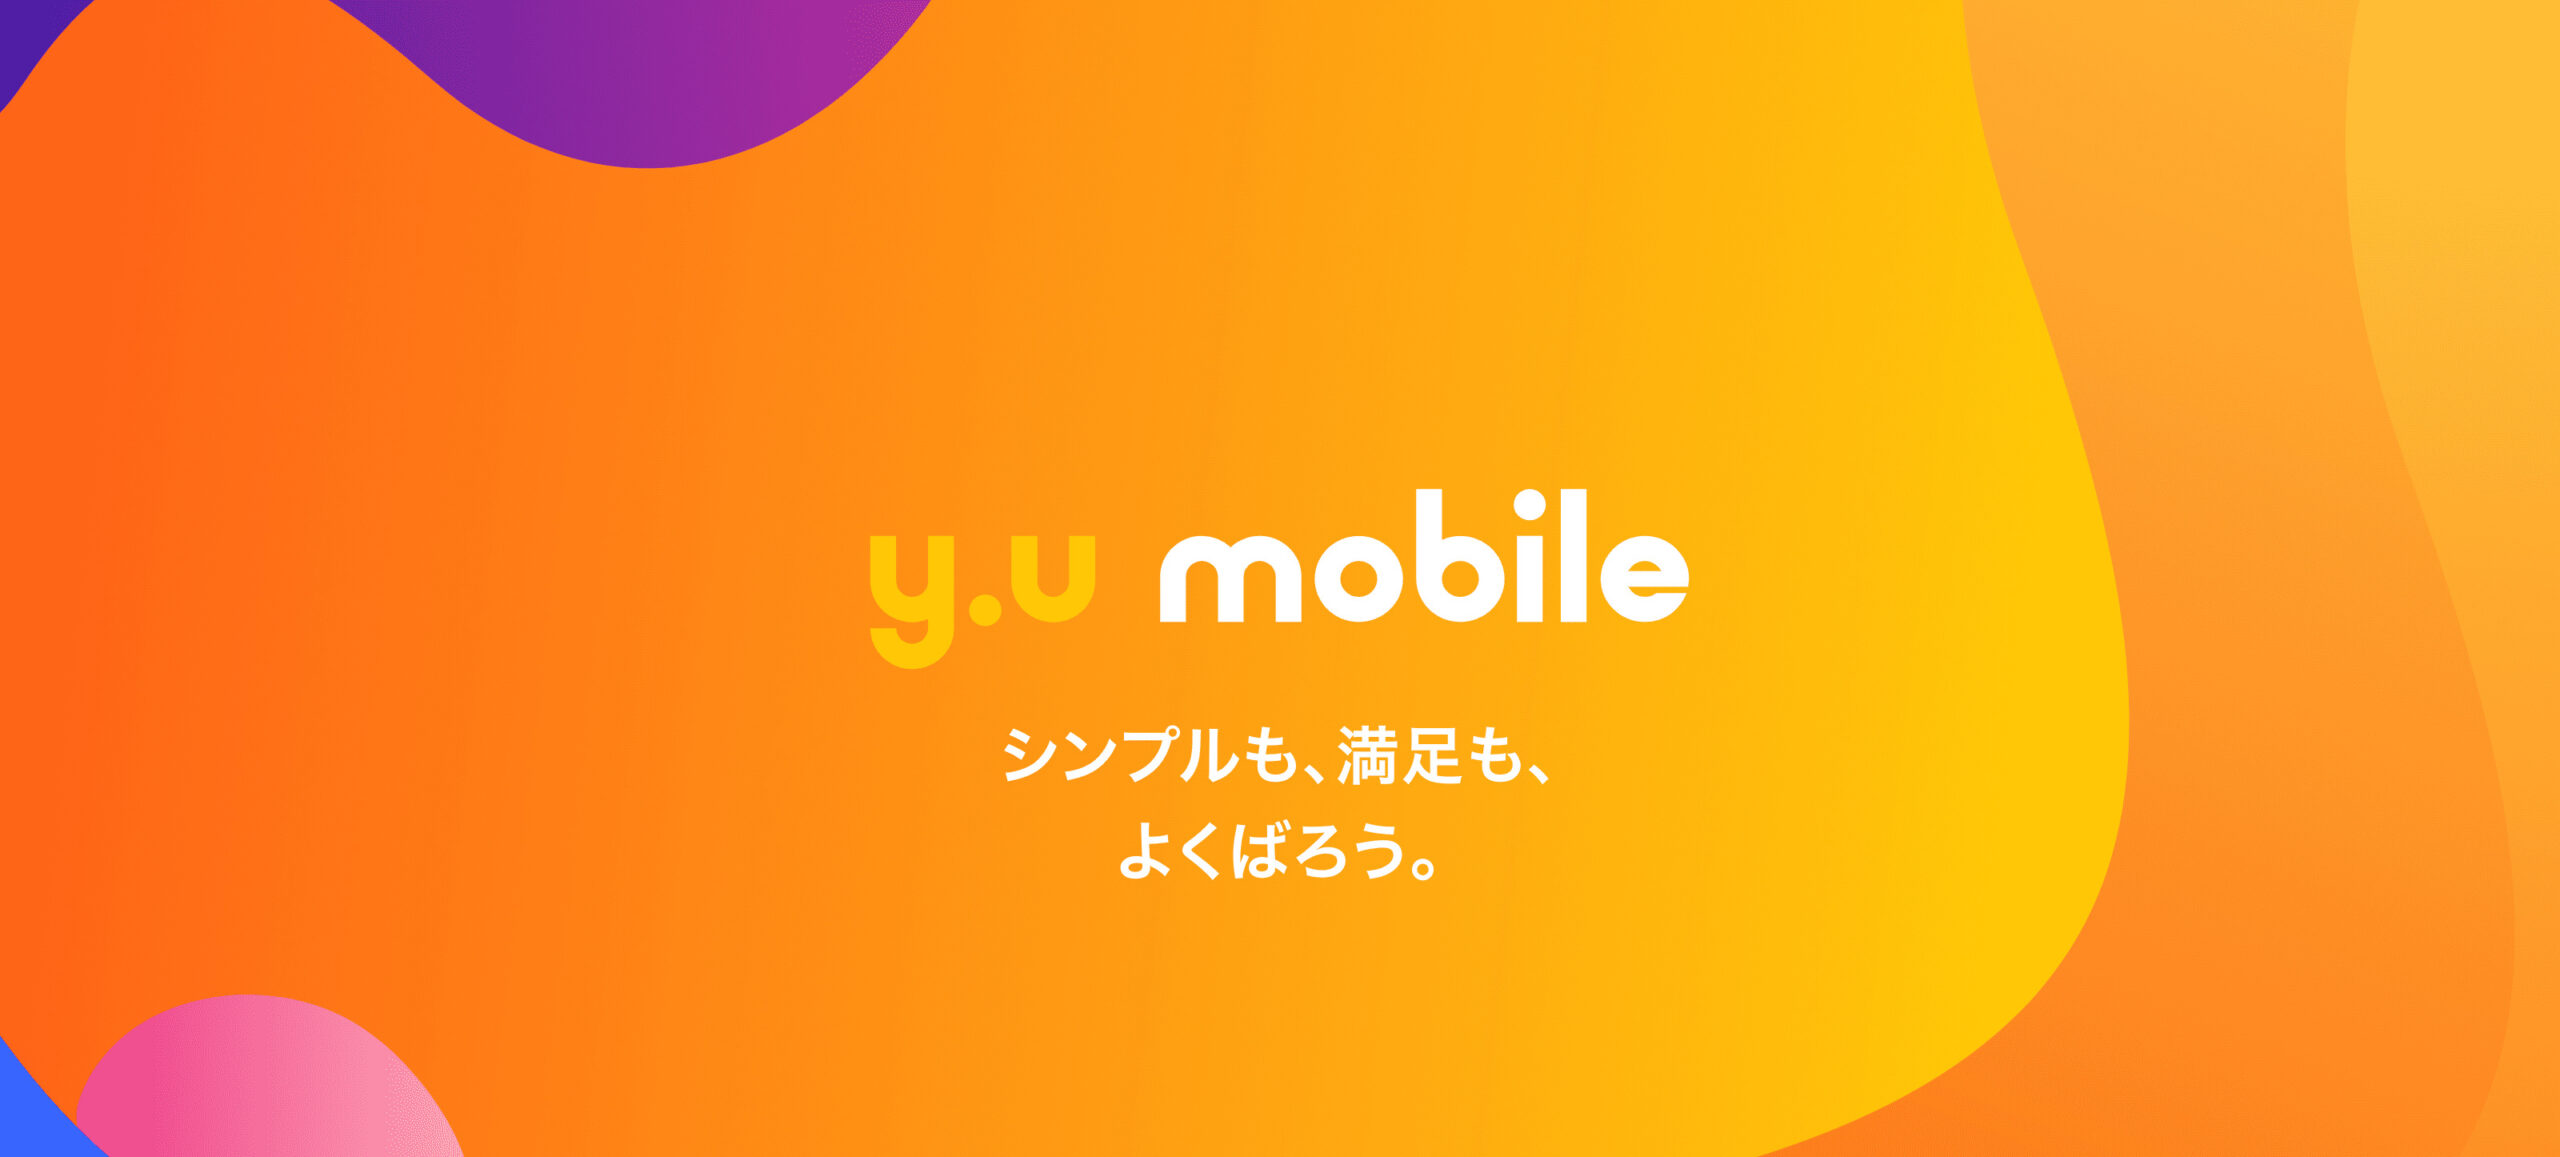 y.u mobile 公式サイト